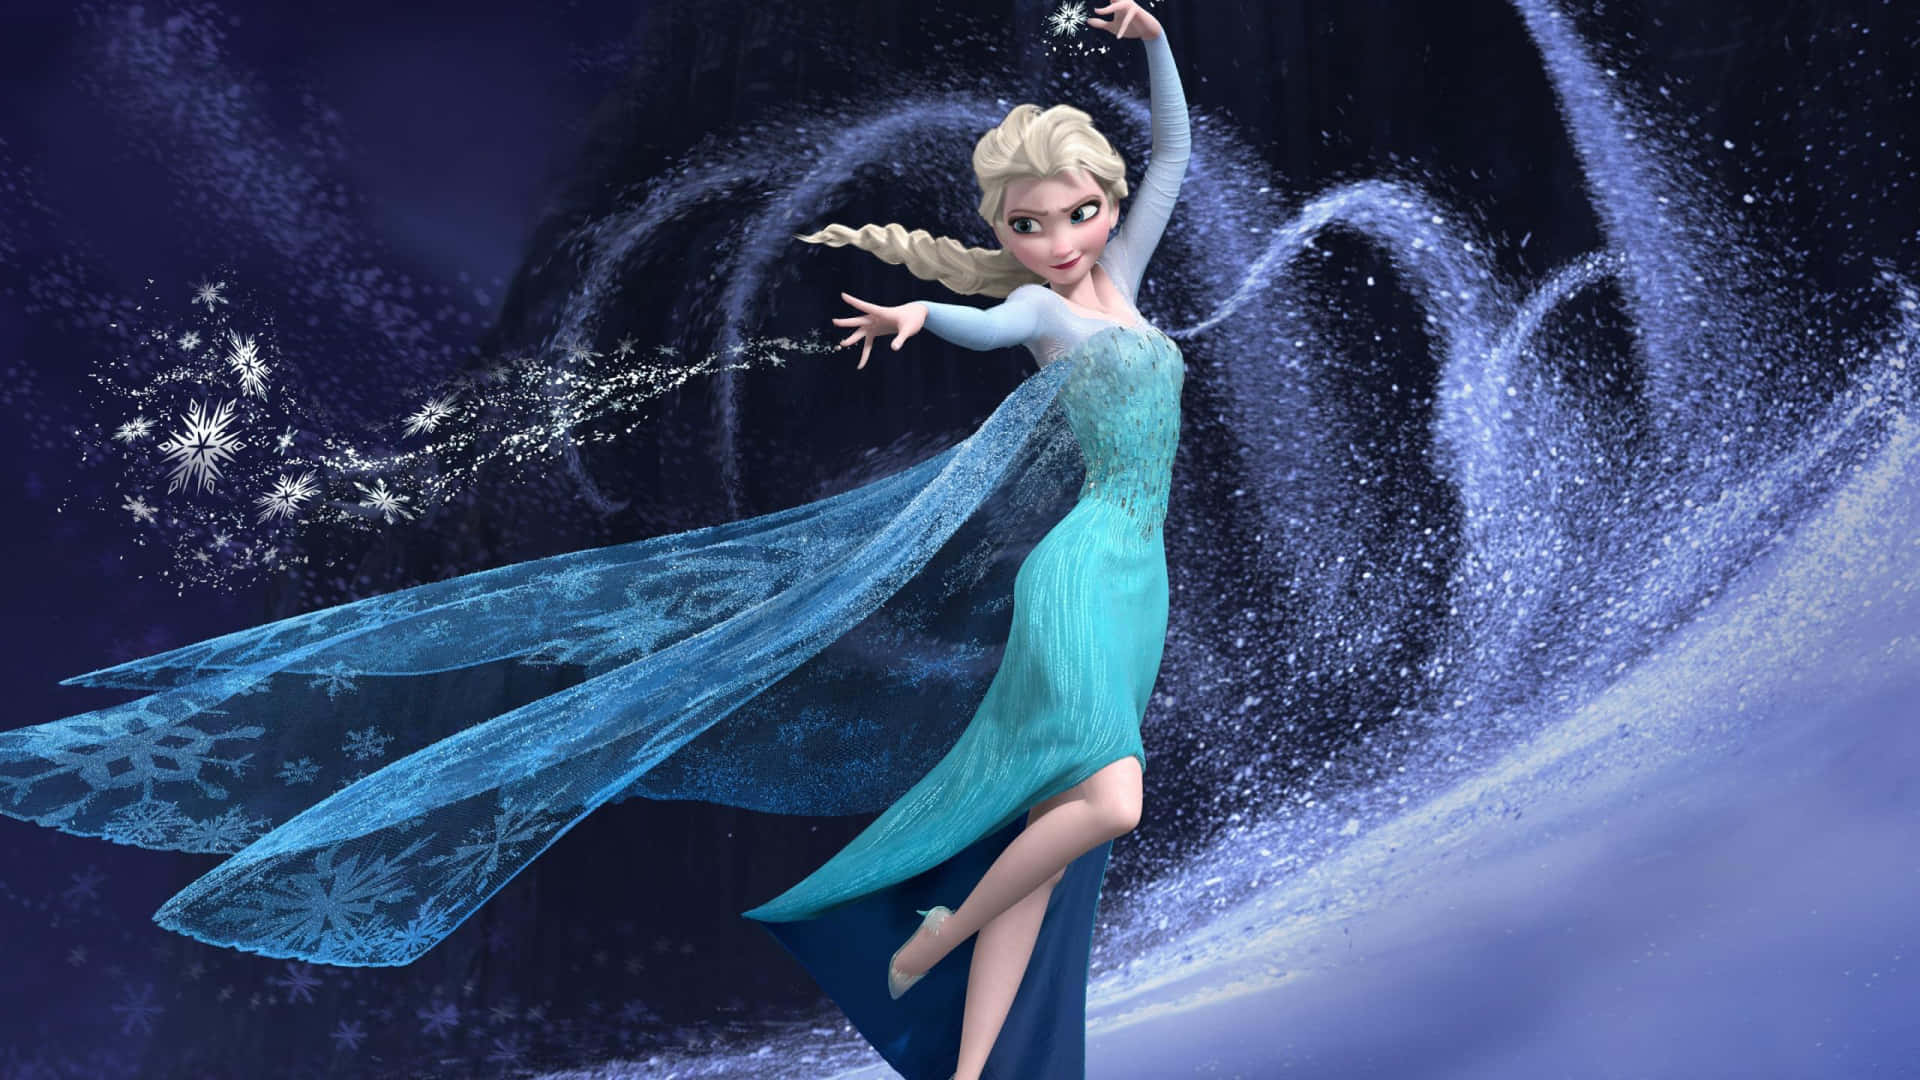 "Let It Go" - Elsa embracing her powers in the Disney hit movie Frozen